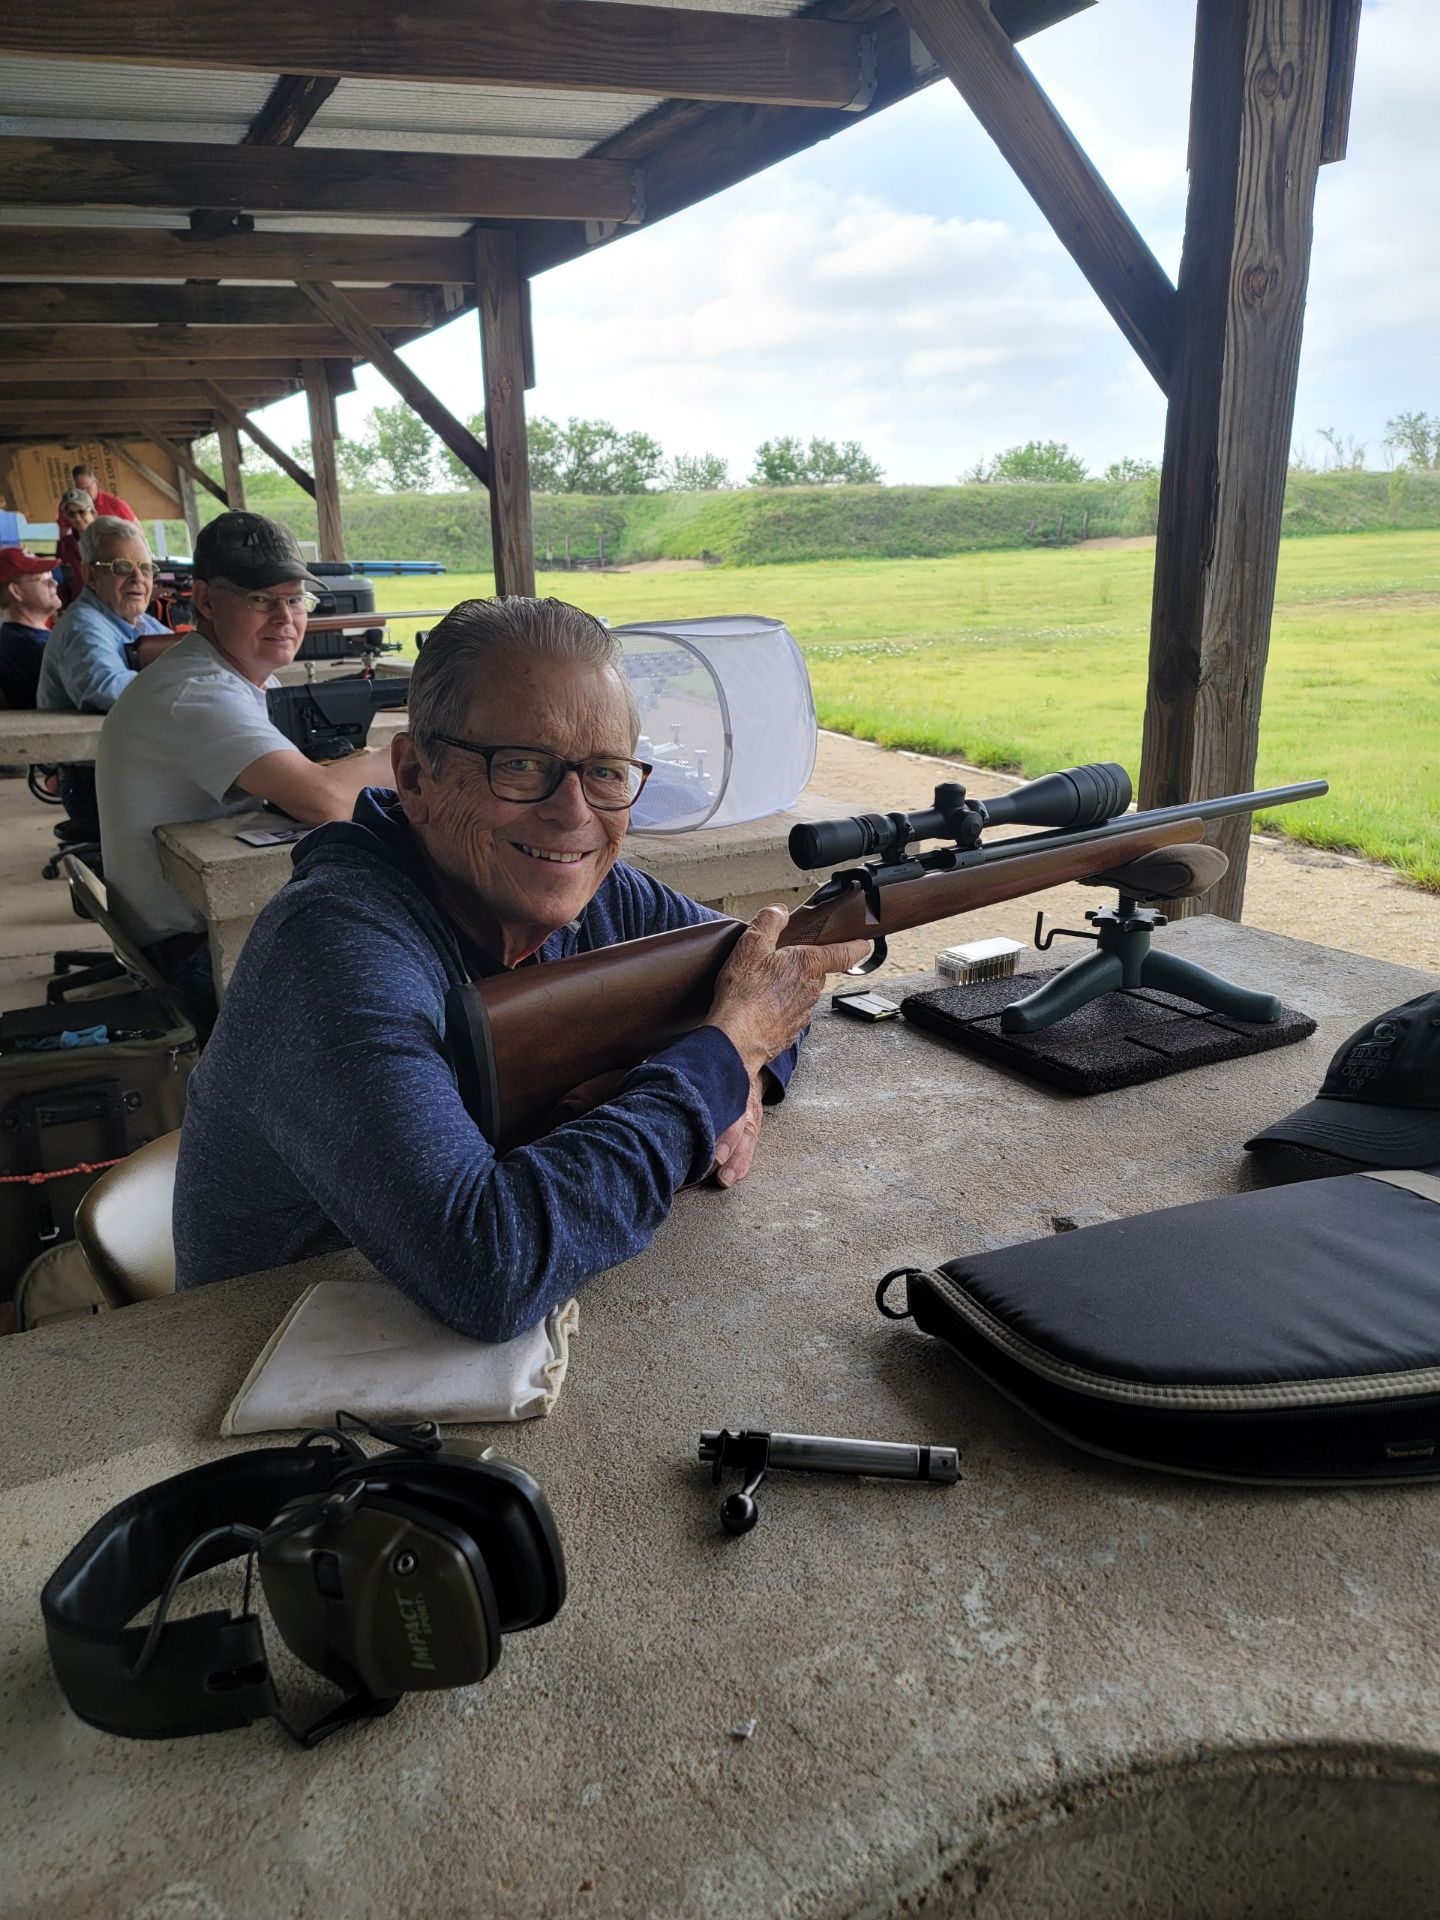 man in blue shirt and glasses smiling at camera sitting at gun range table holding a rifle